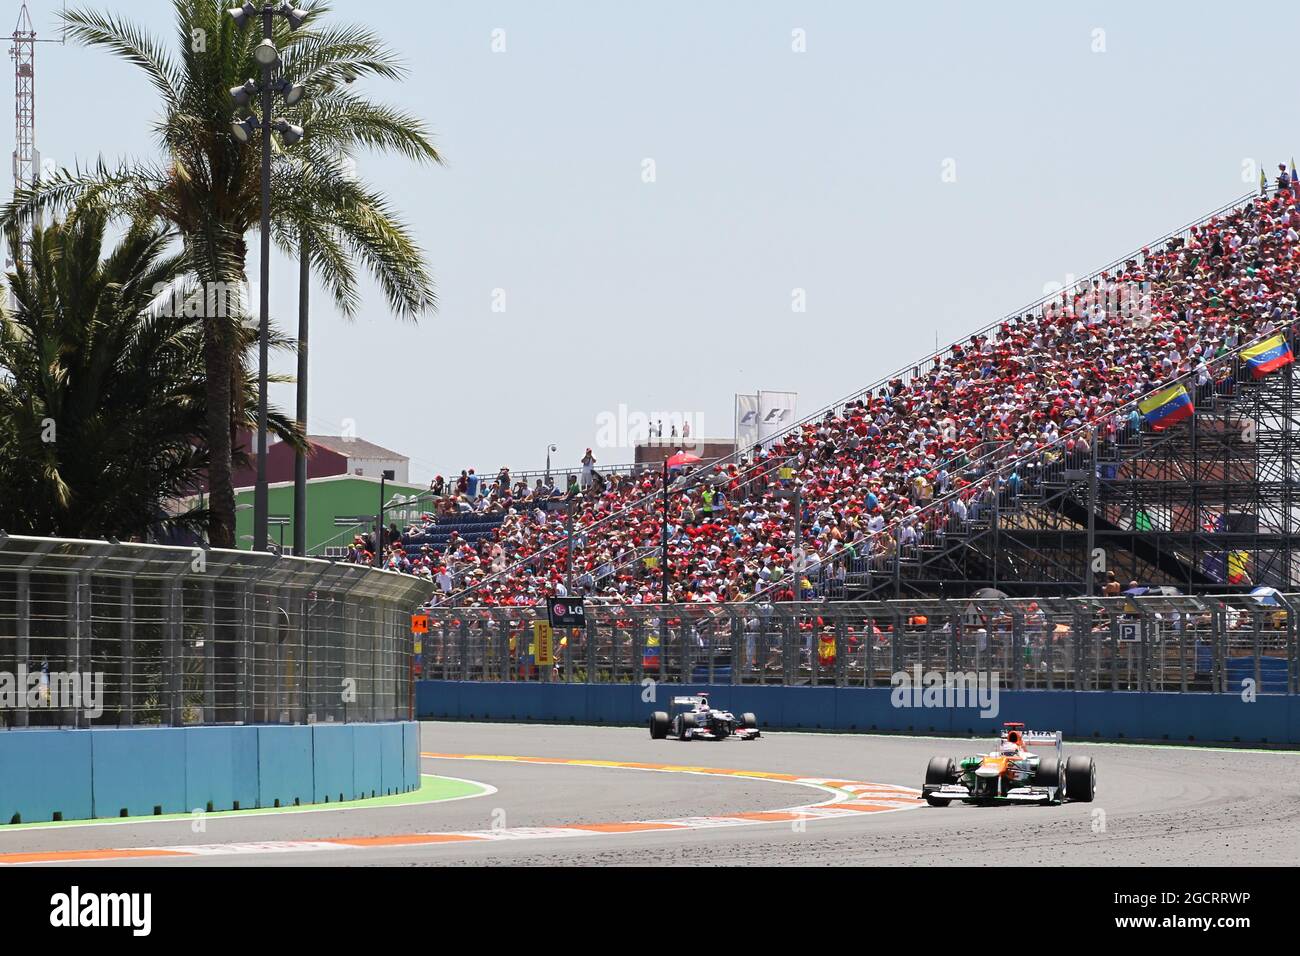 Paul di Resta (GBR) Sahara Force India VJM05. European Grand Prix, Sunday 24th June 2012. Valencia, Spain. Stock Photo